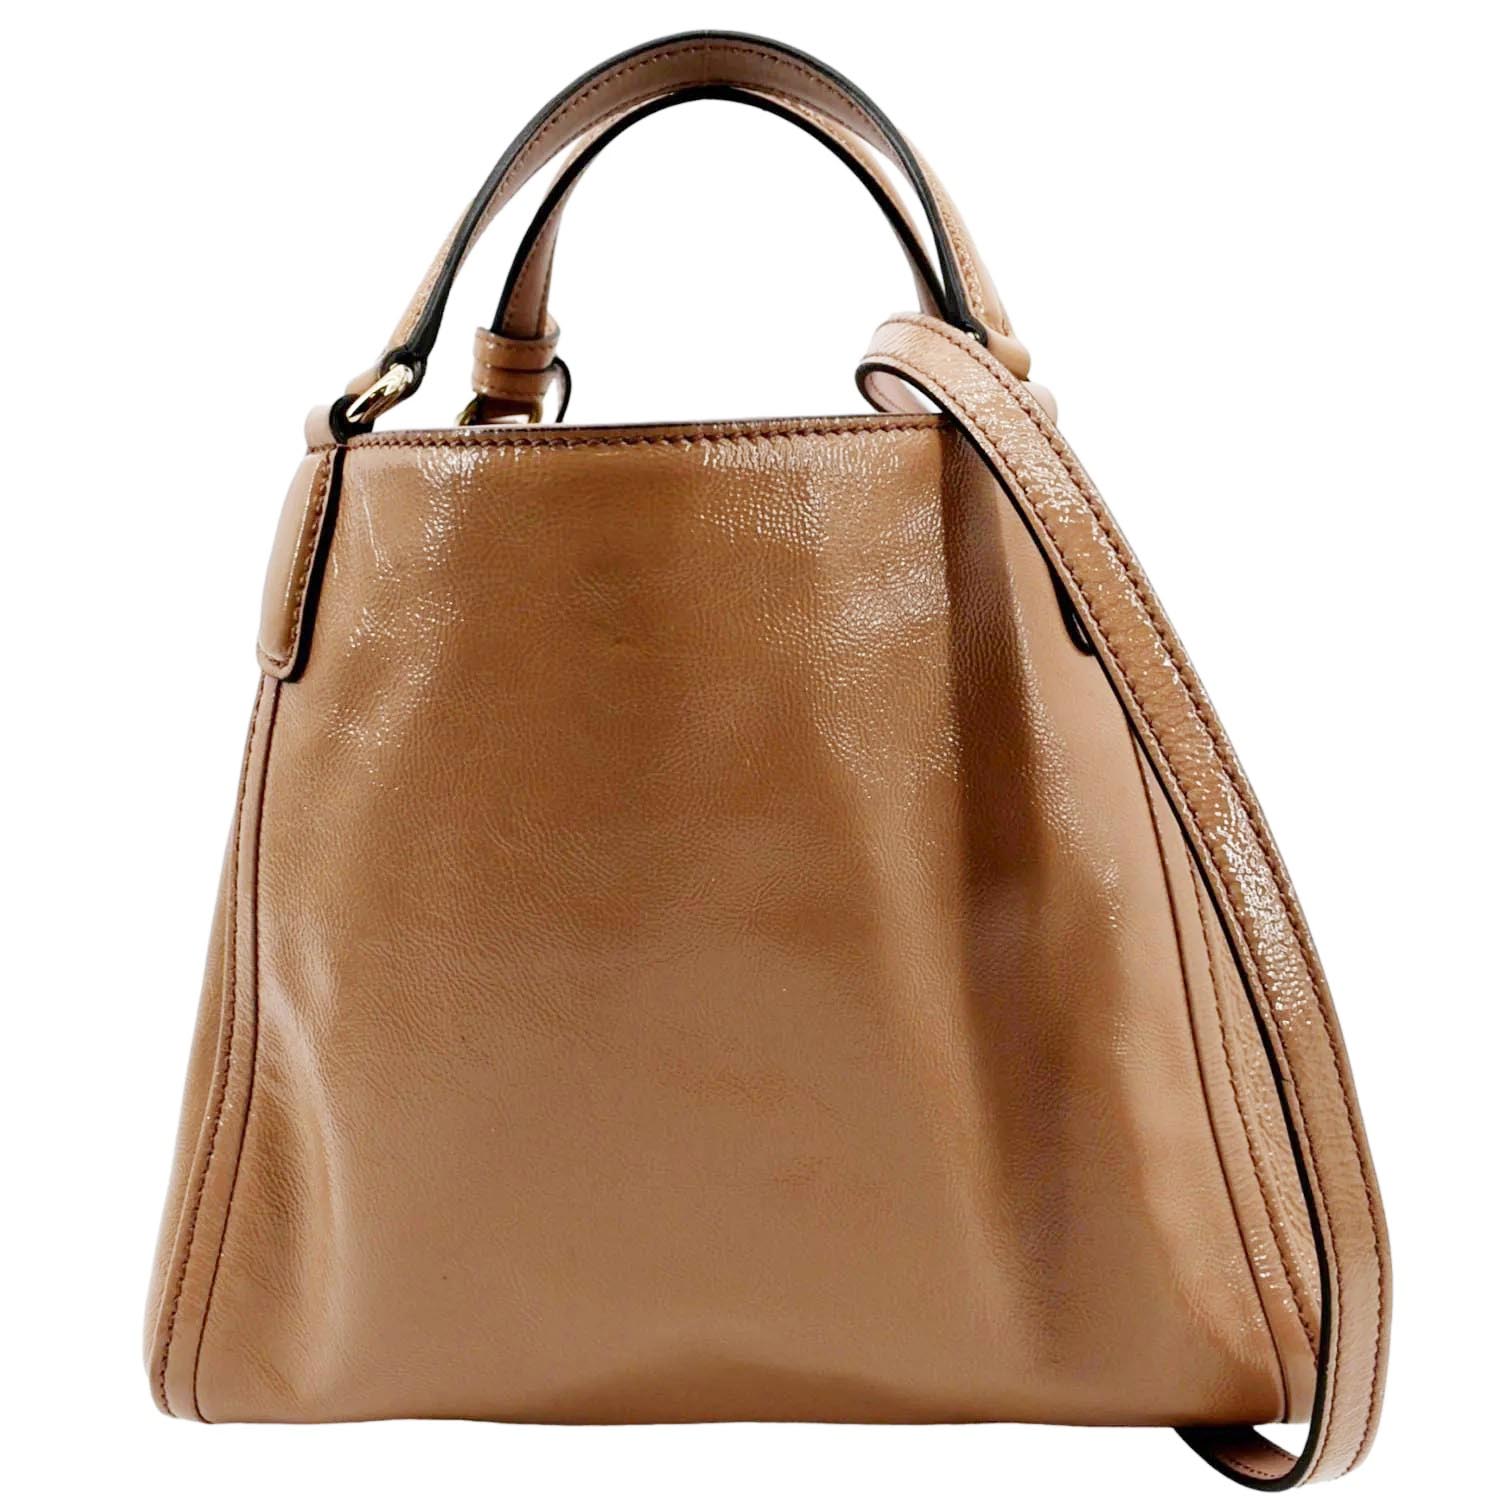 Prada Mini Saffiano Leather Bag - Neutrals